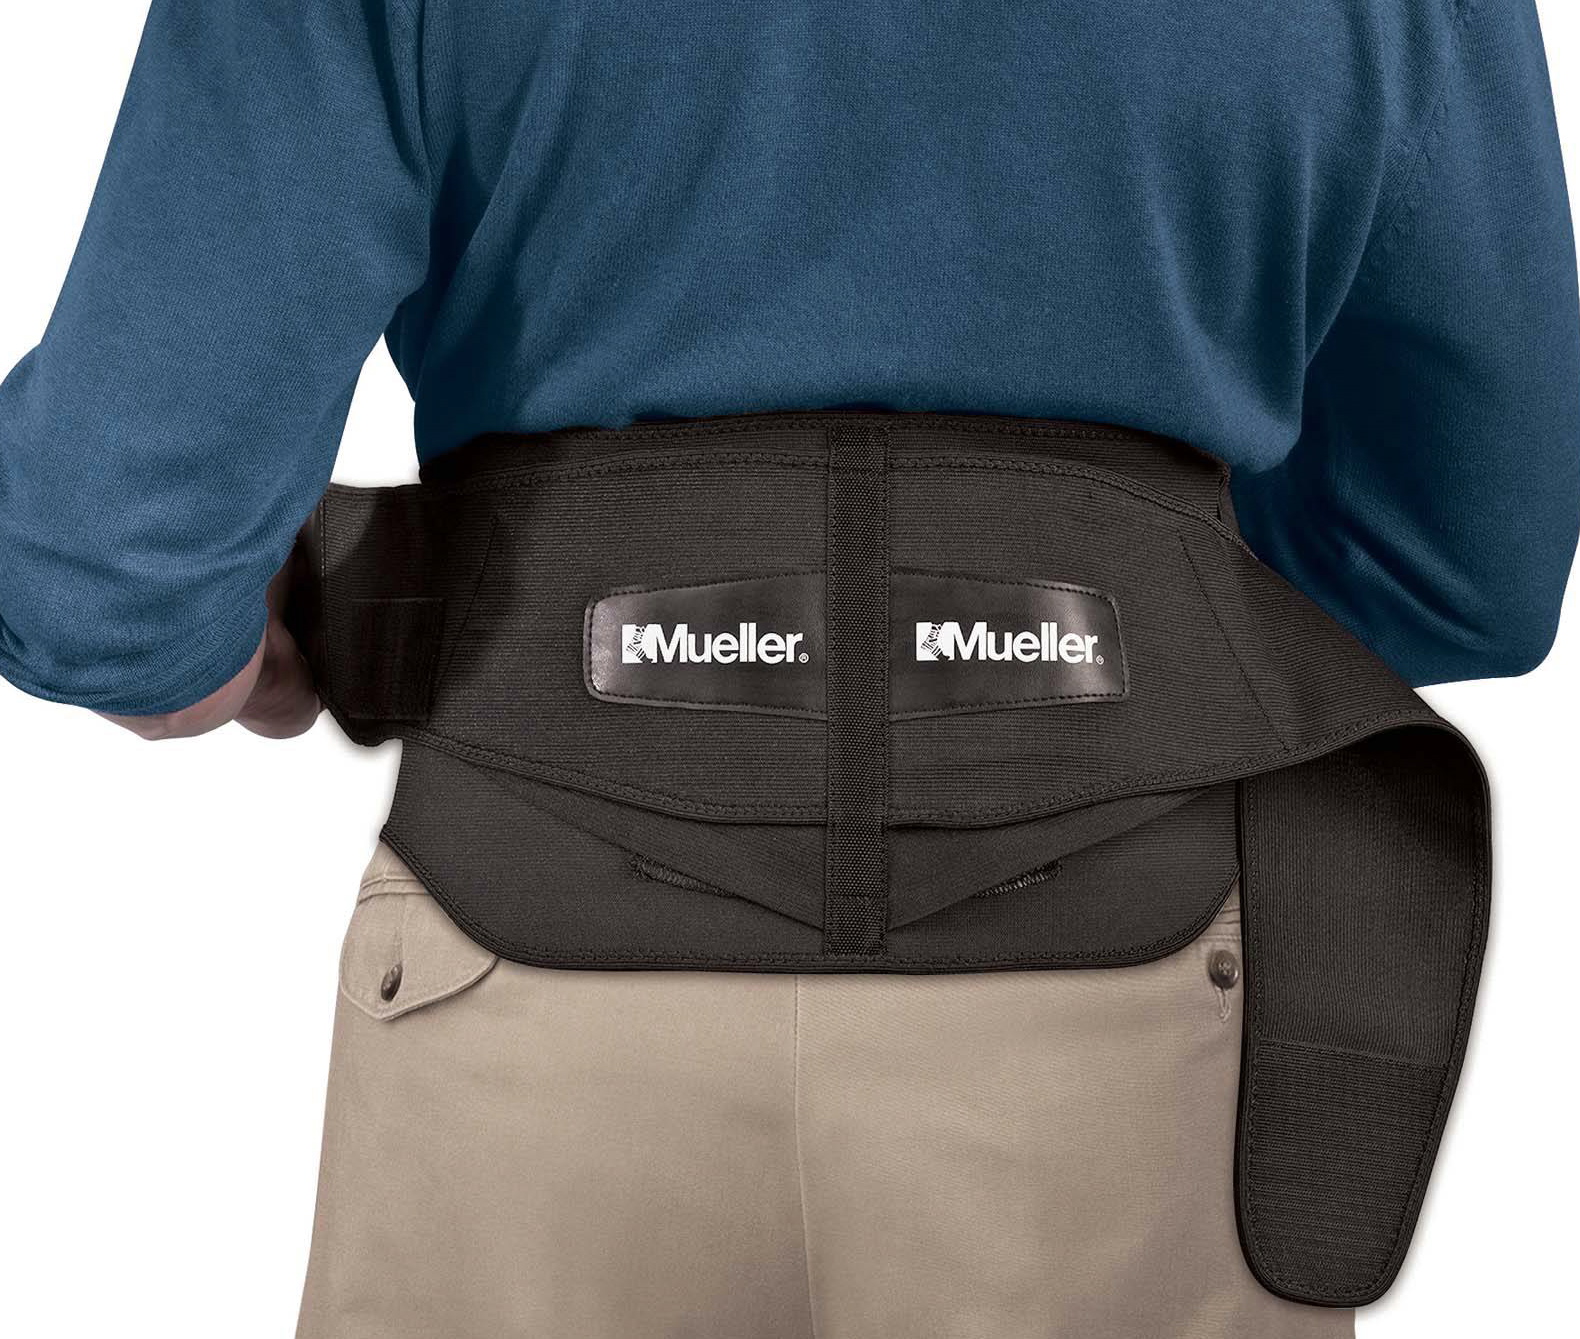 Mueller - Mueller lumbar back brace & pad - one size